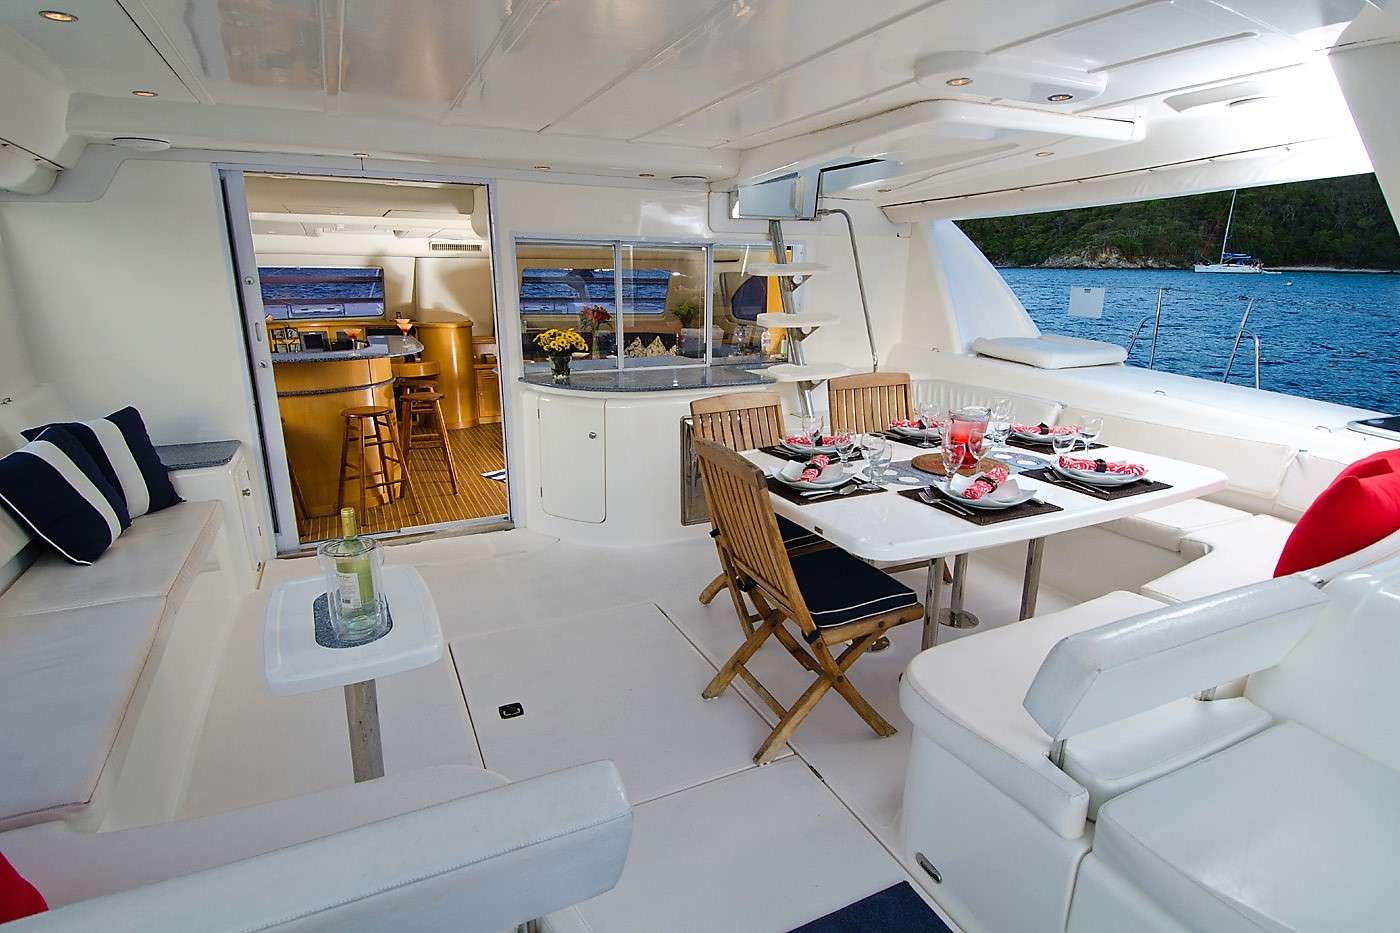 THE BIG DOG Yacht Charter - Roomy cockpit